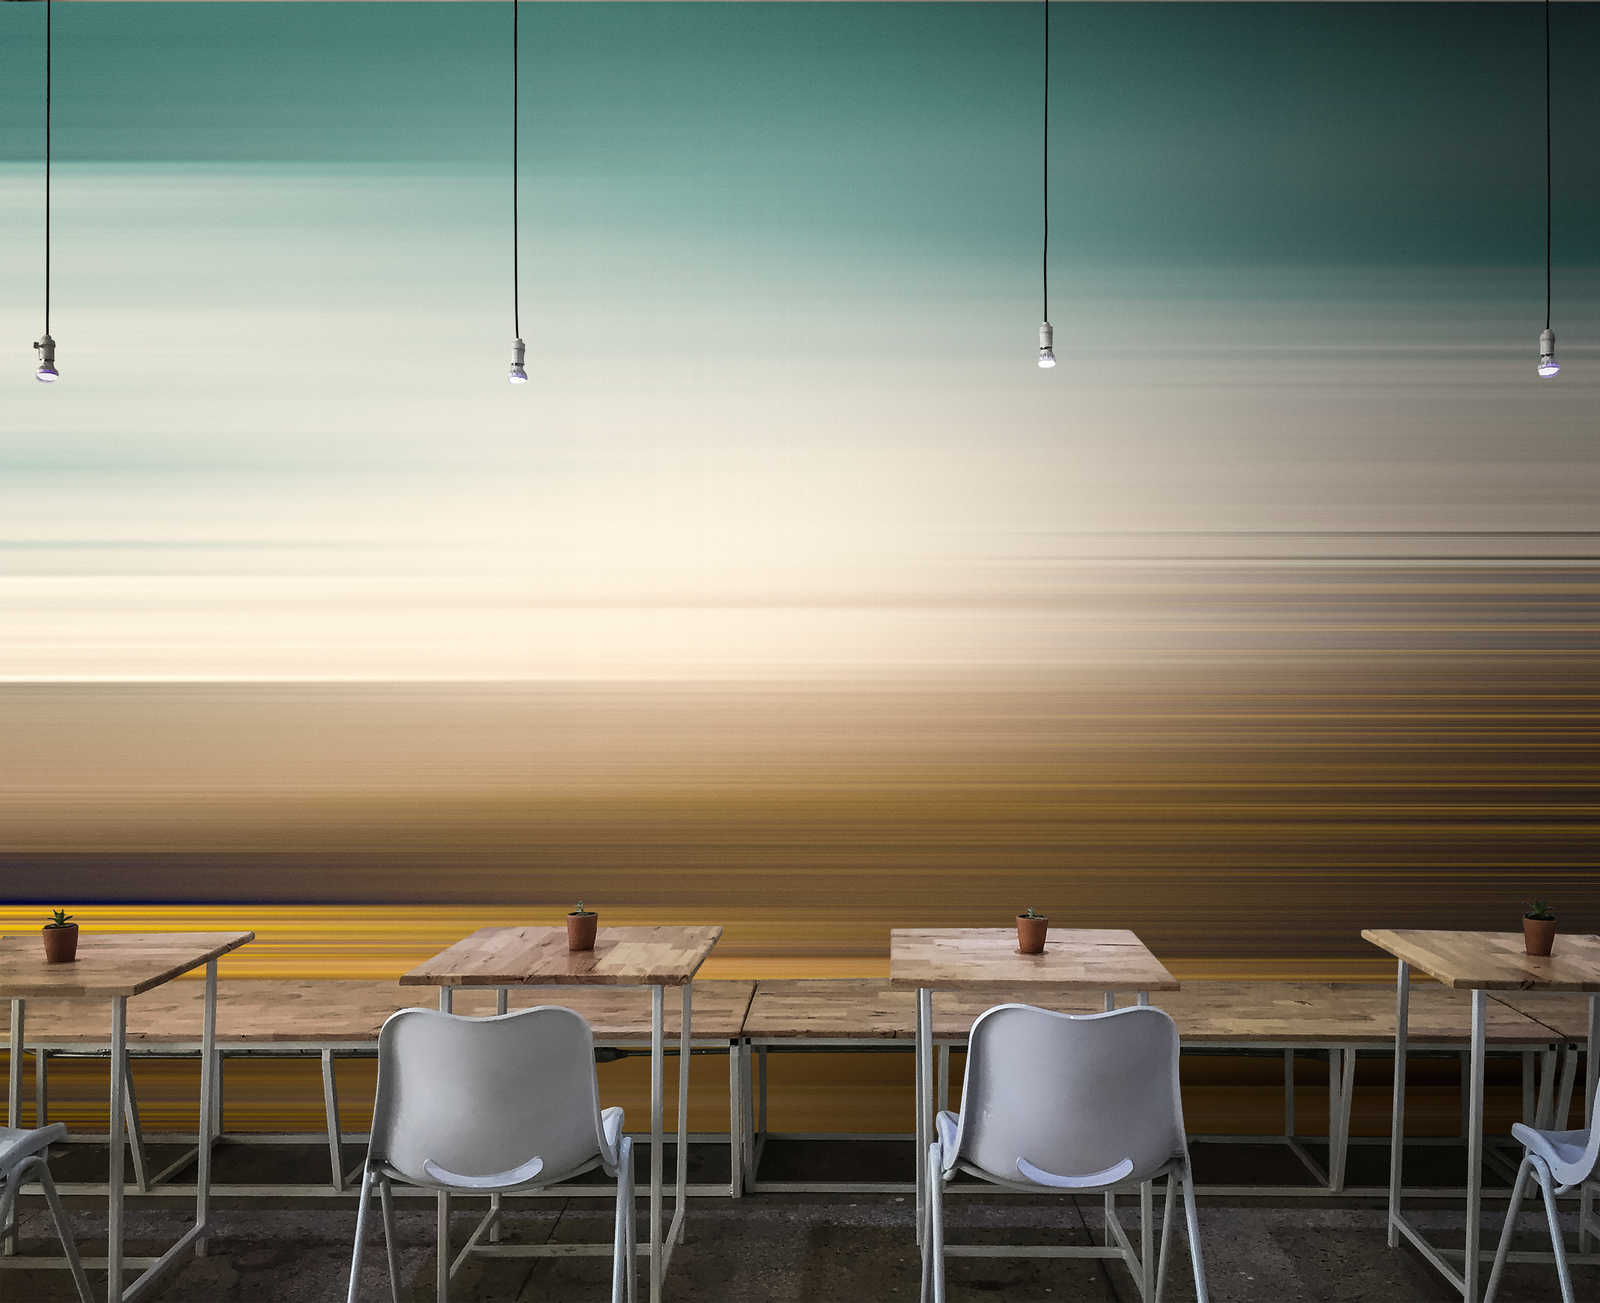             Horizonte 3 - Mural de pared paisaje abstracto con diseño de colores
        